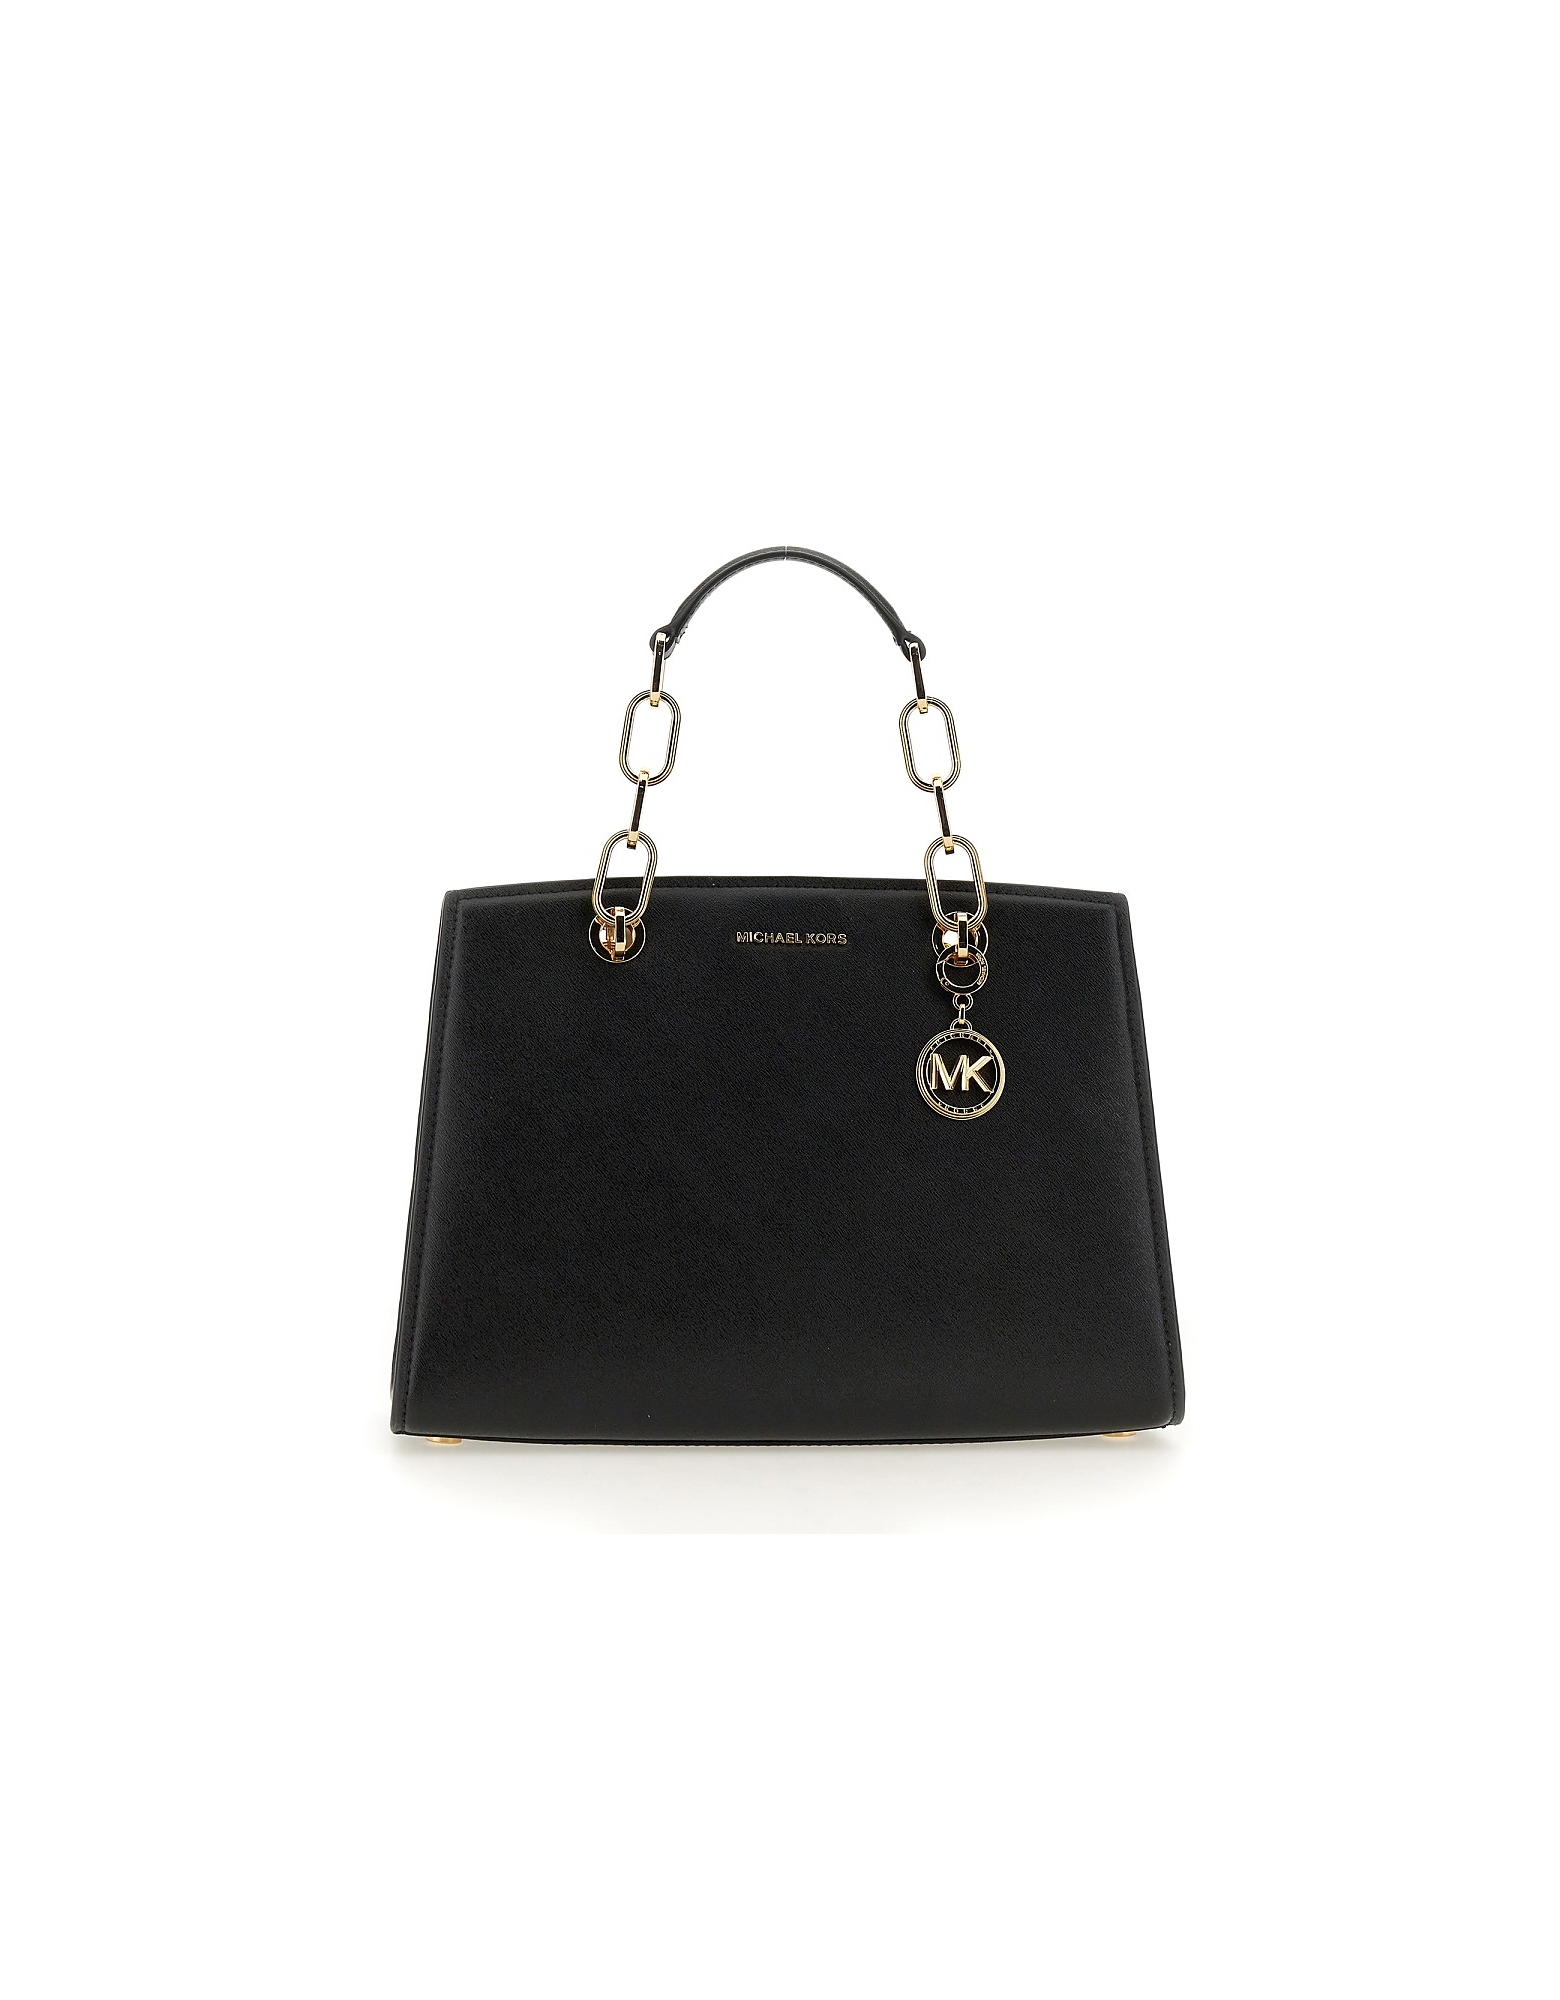 Michael Kors Designer Handbags In Black